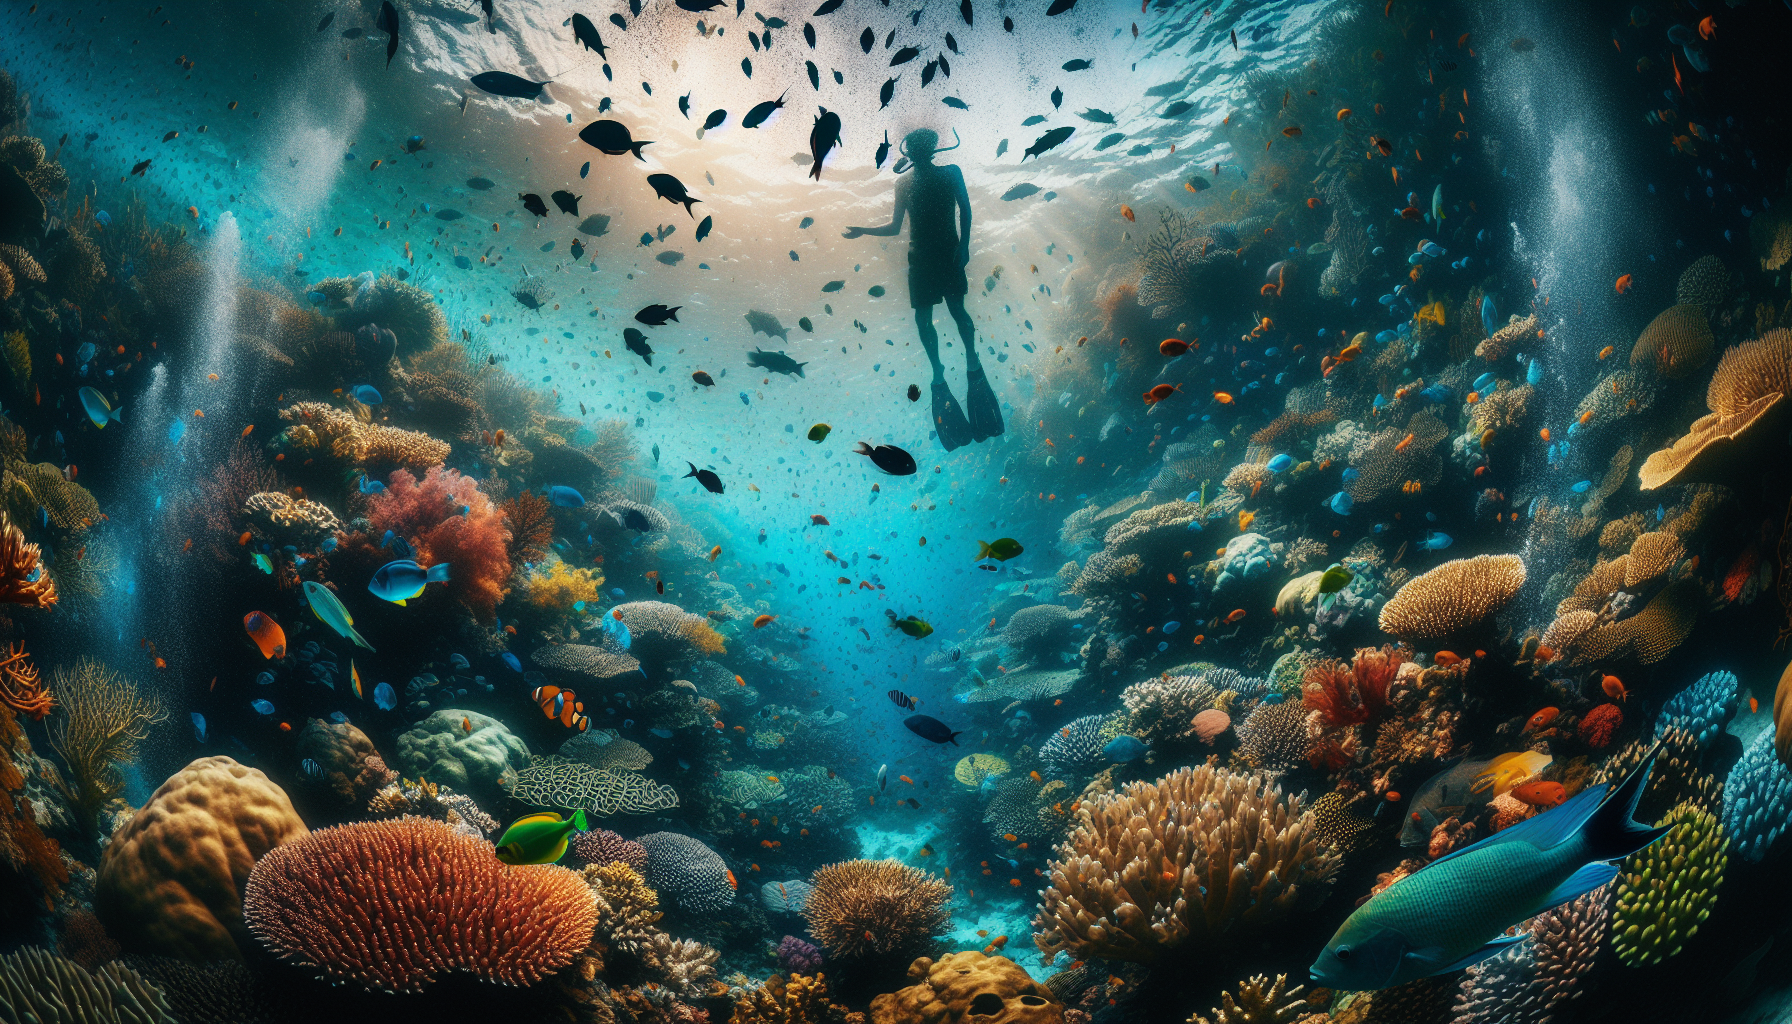 Snorkeling amidst vibrant coral reefs in Punta Uva